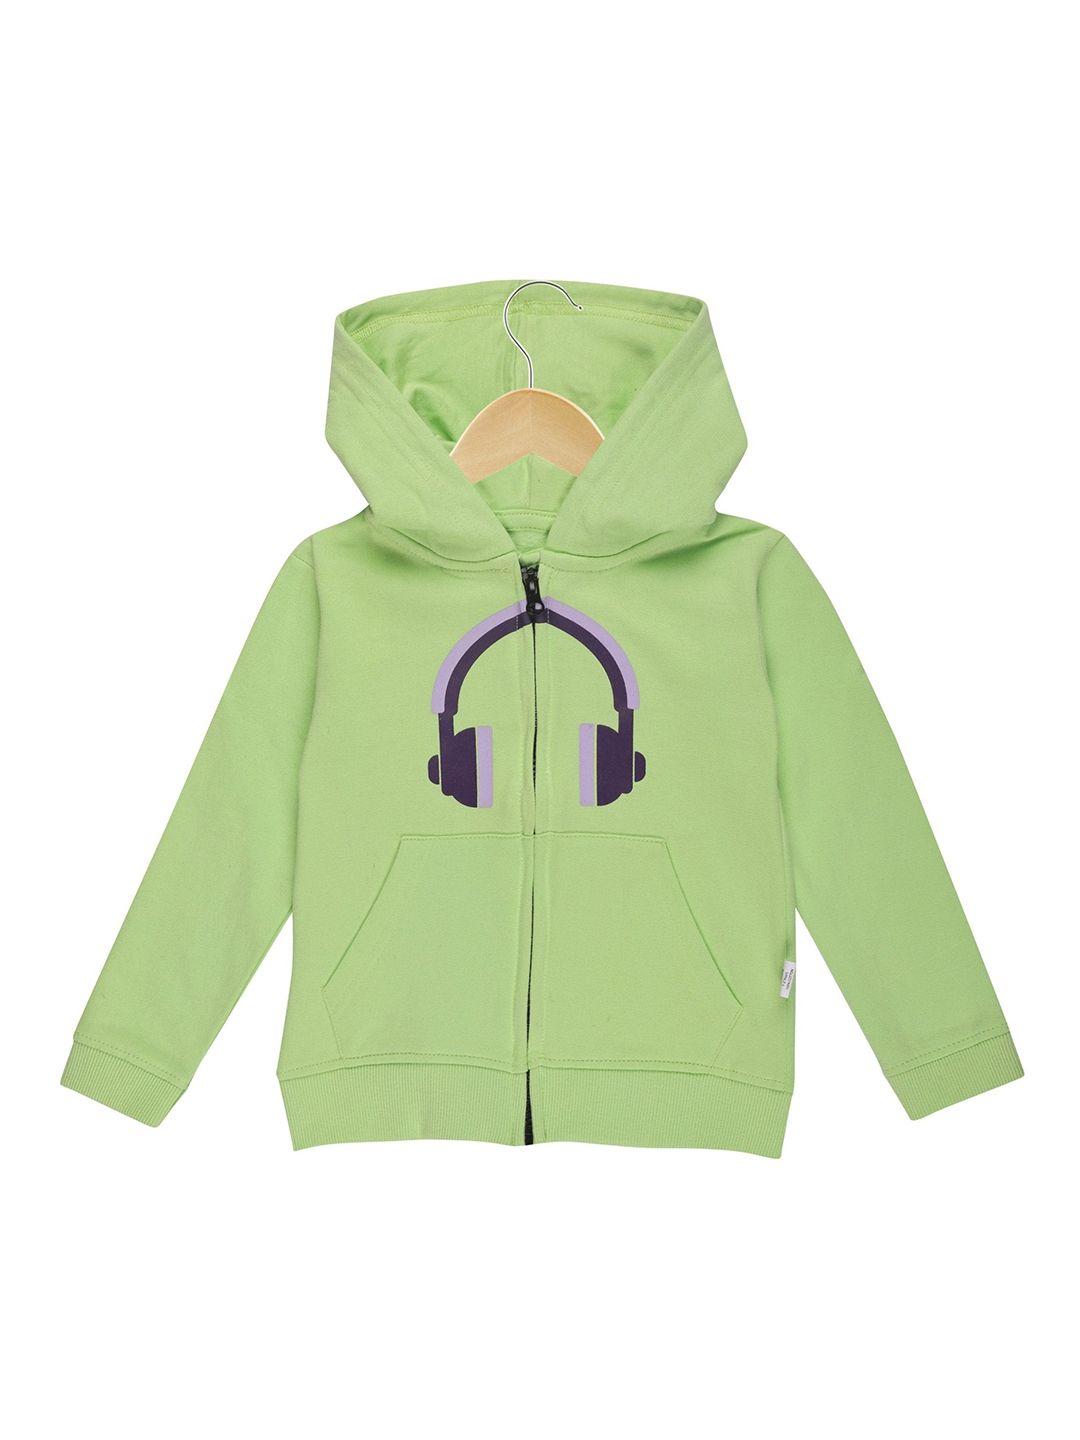 the-mom-store-unisex-kids-fluorescent-green-hooded-sweatshirt